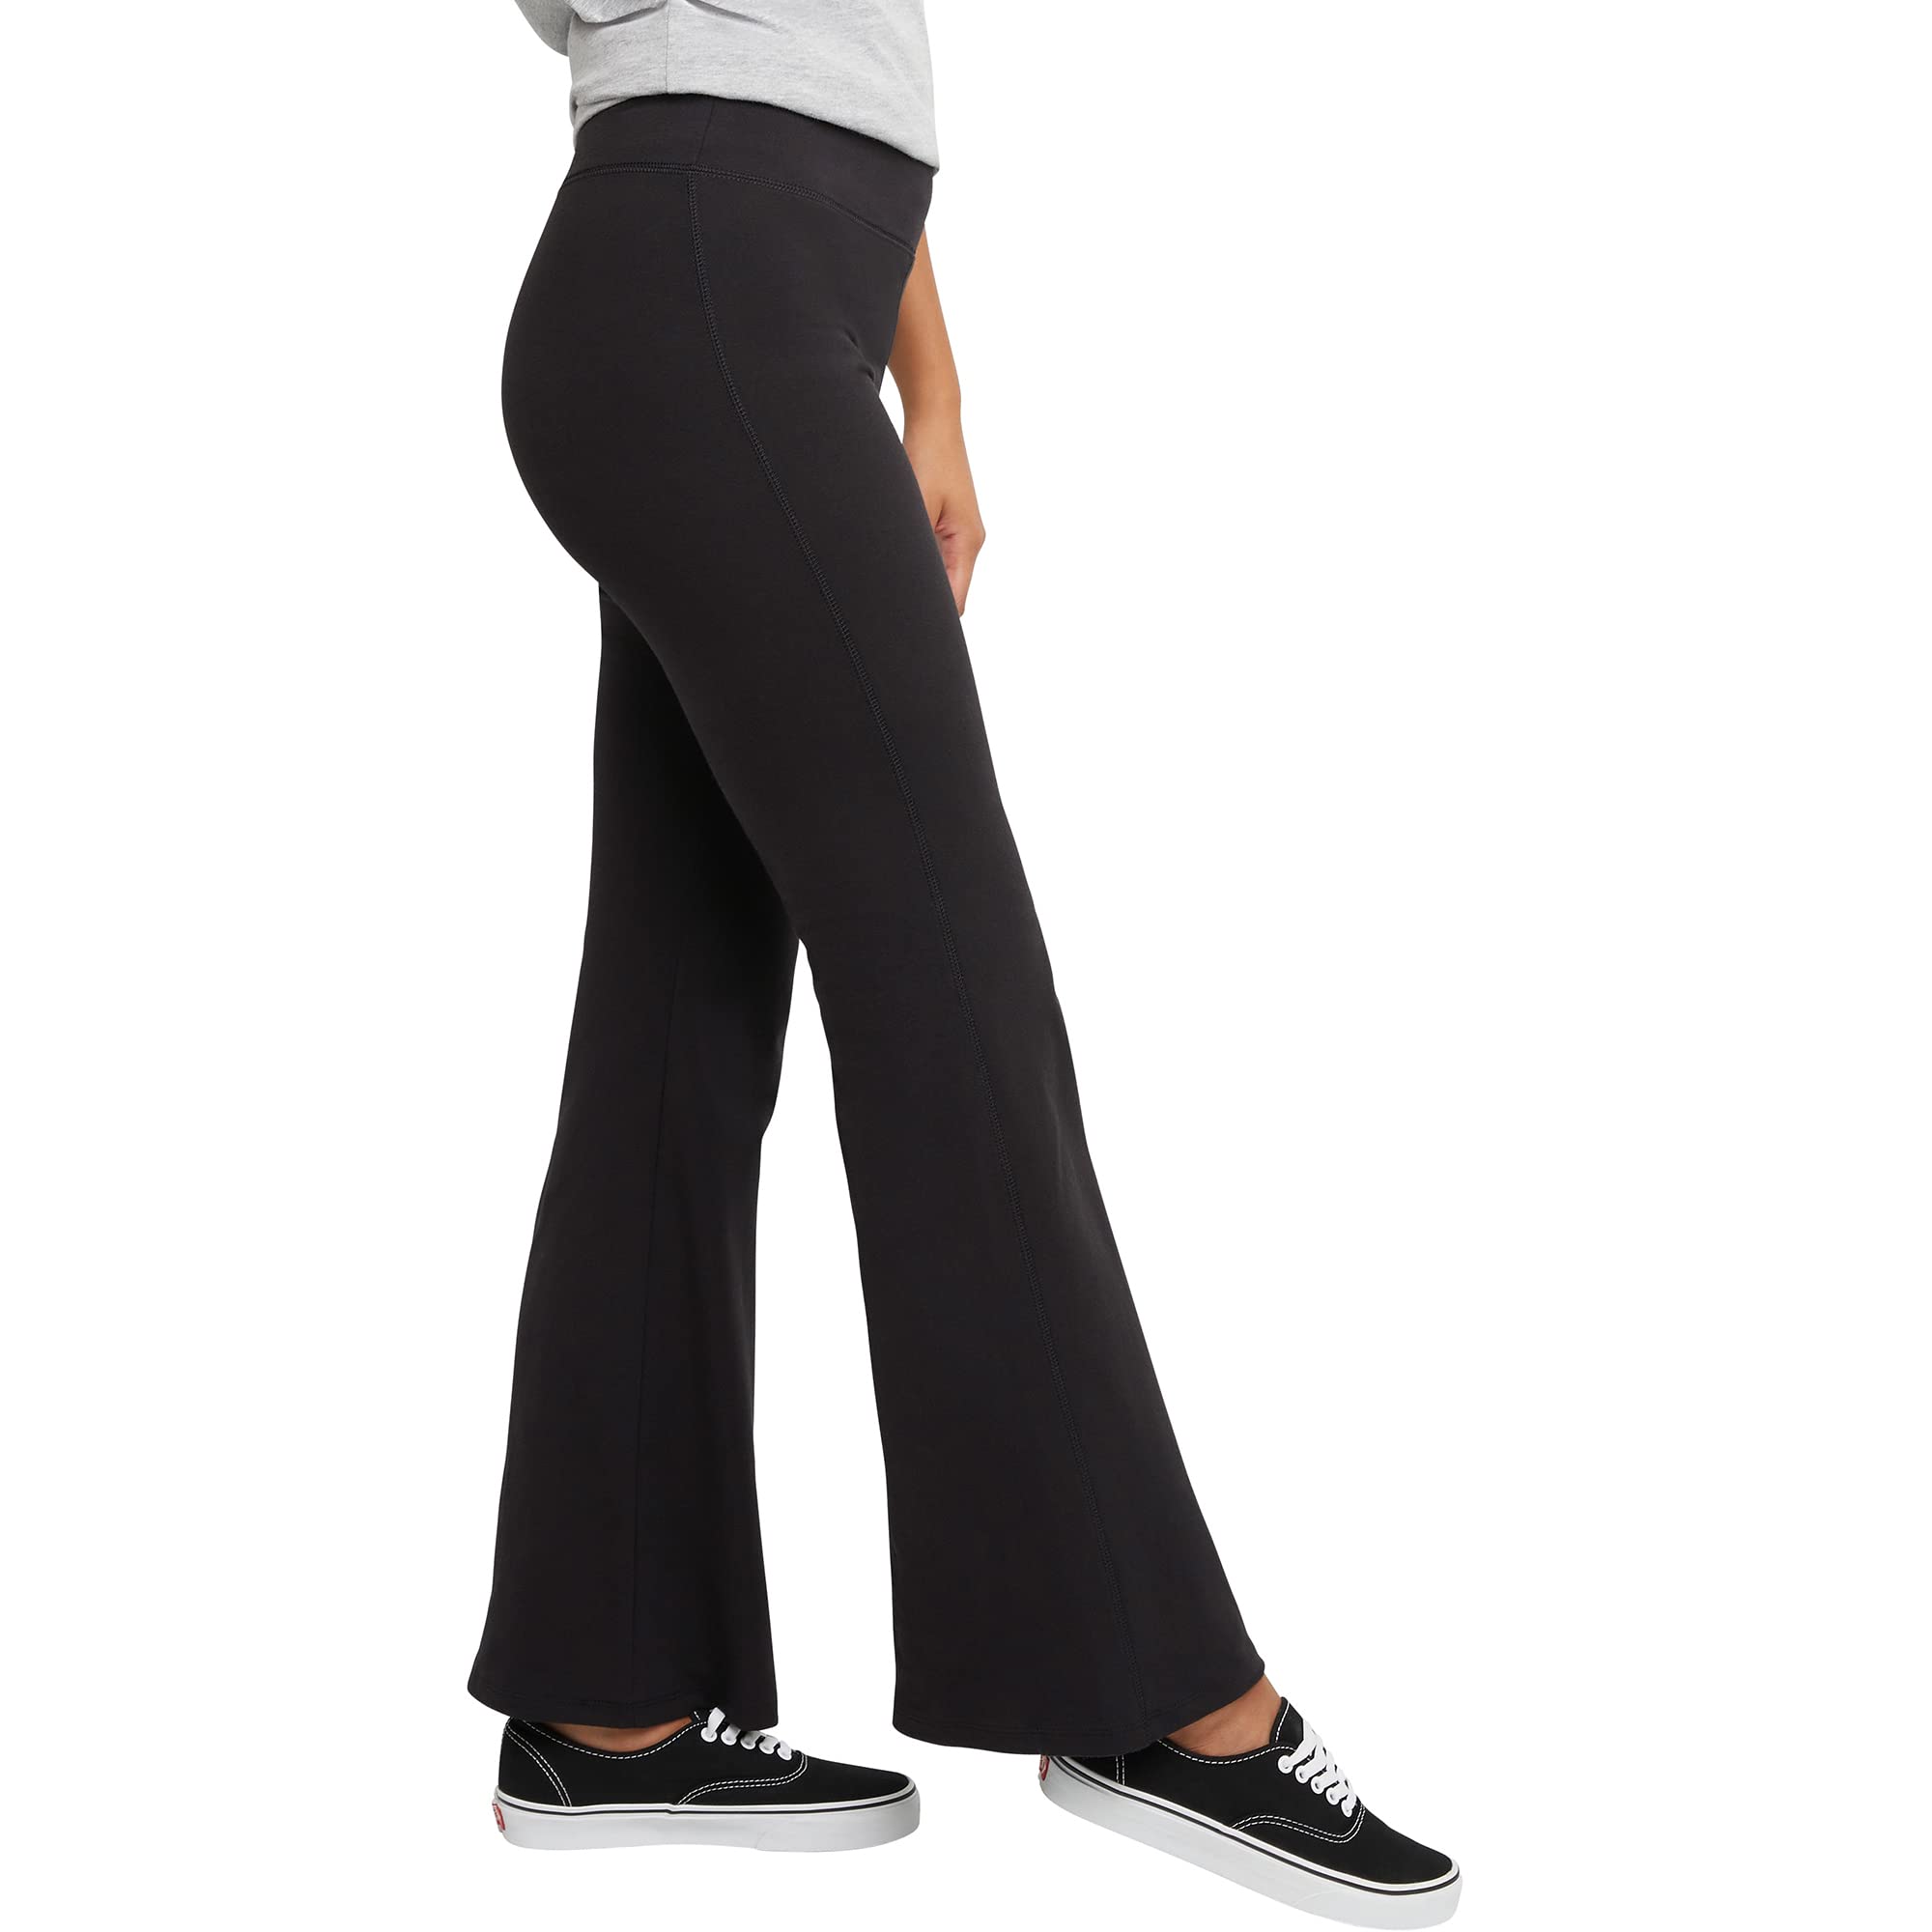 Hanes Women's Originals Jersey Flare Leg, Bell Bottom Stretch Pants